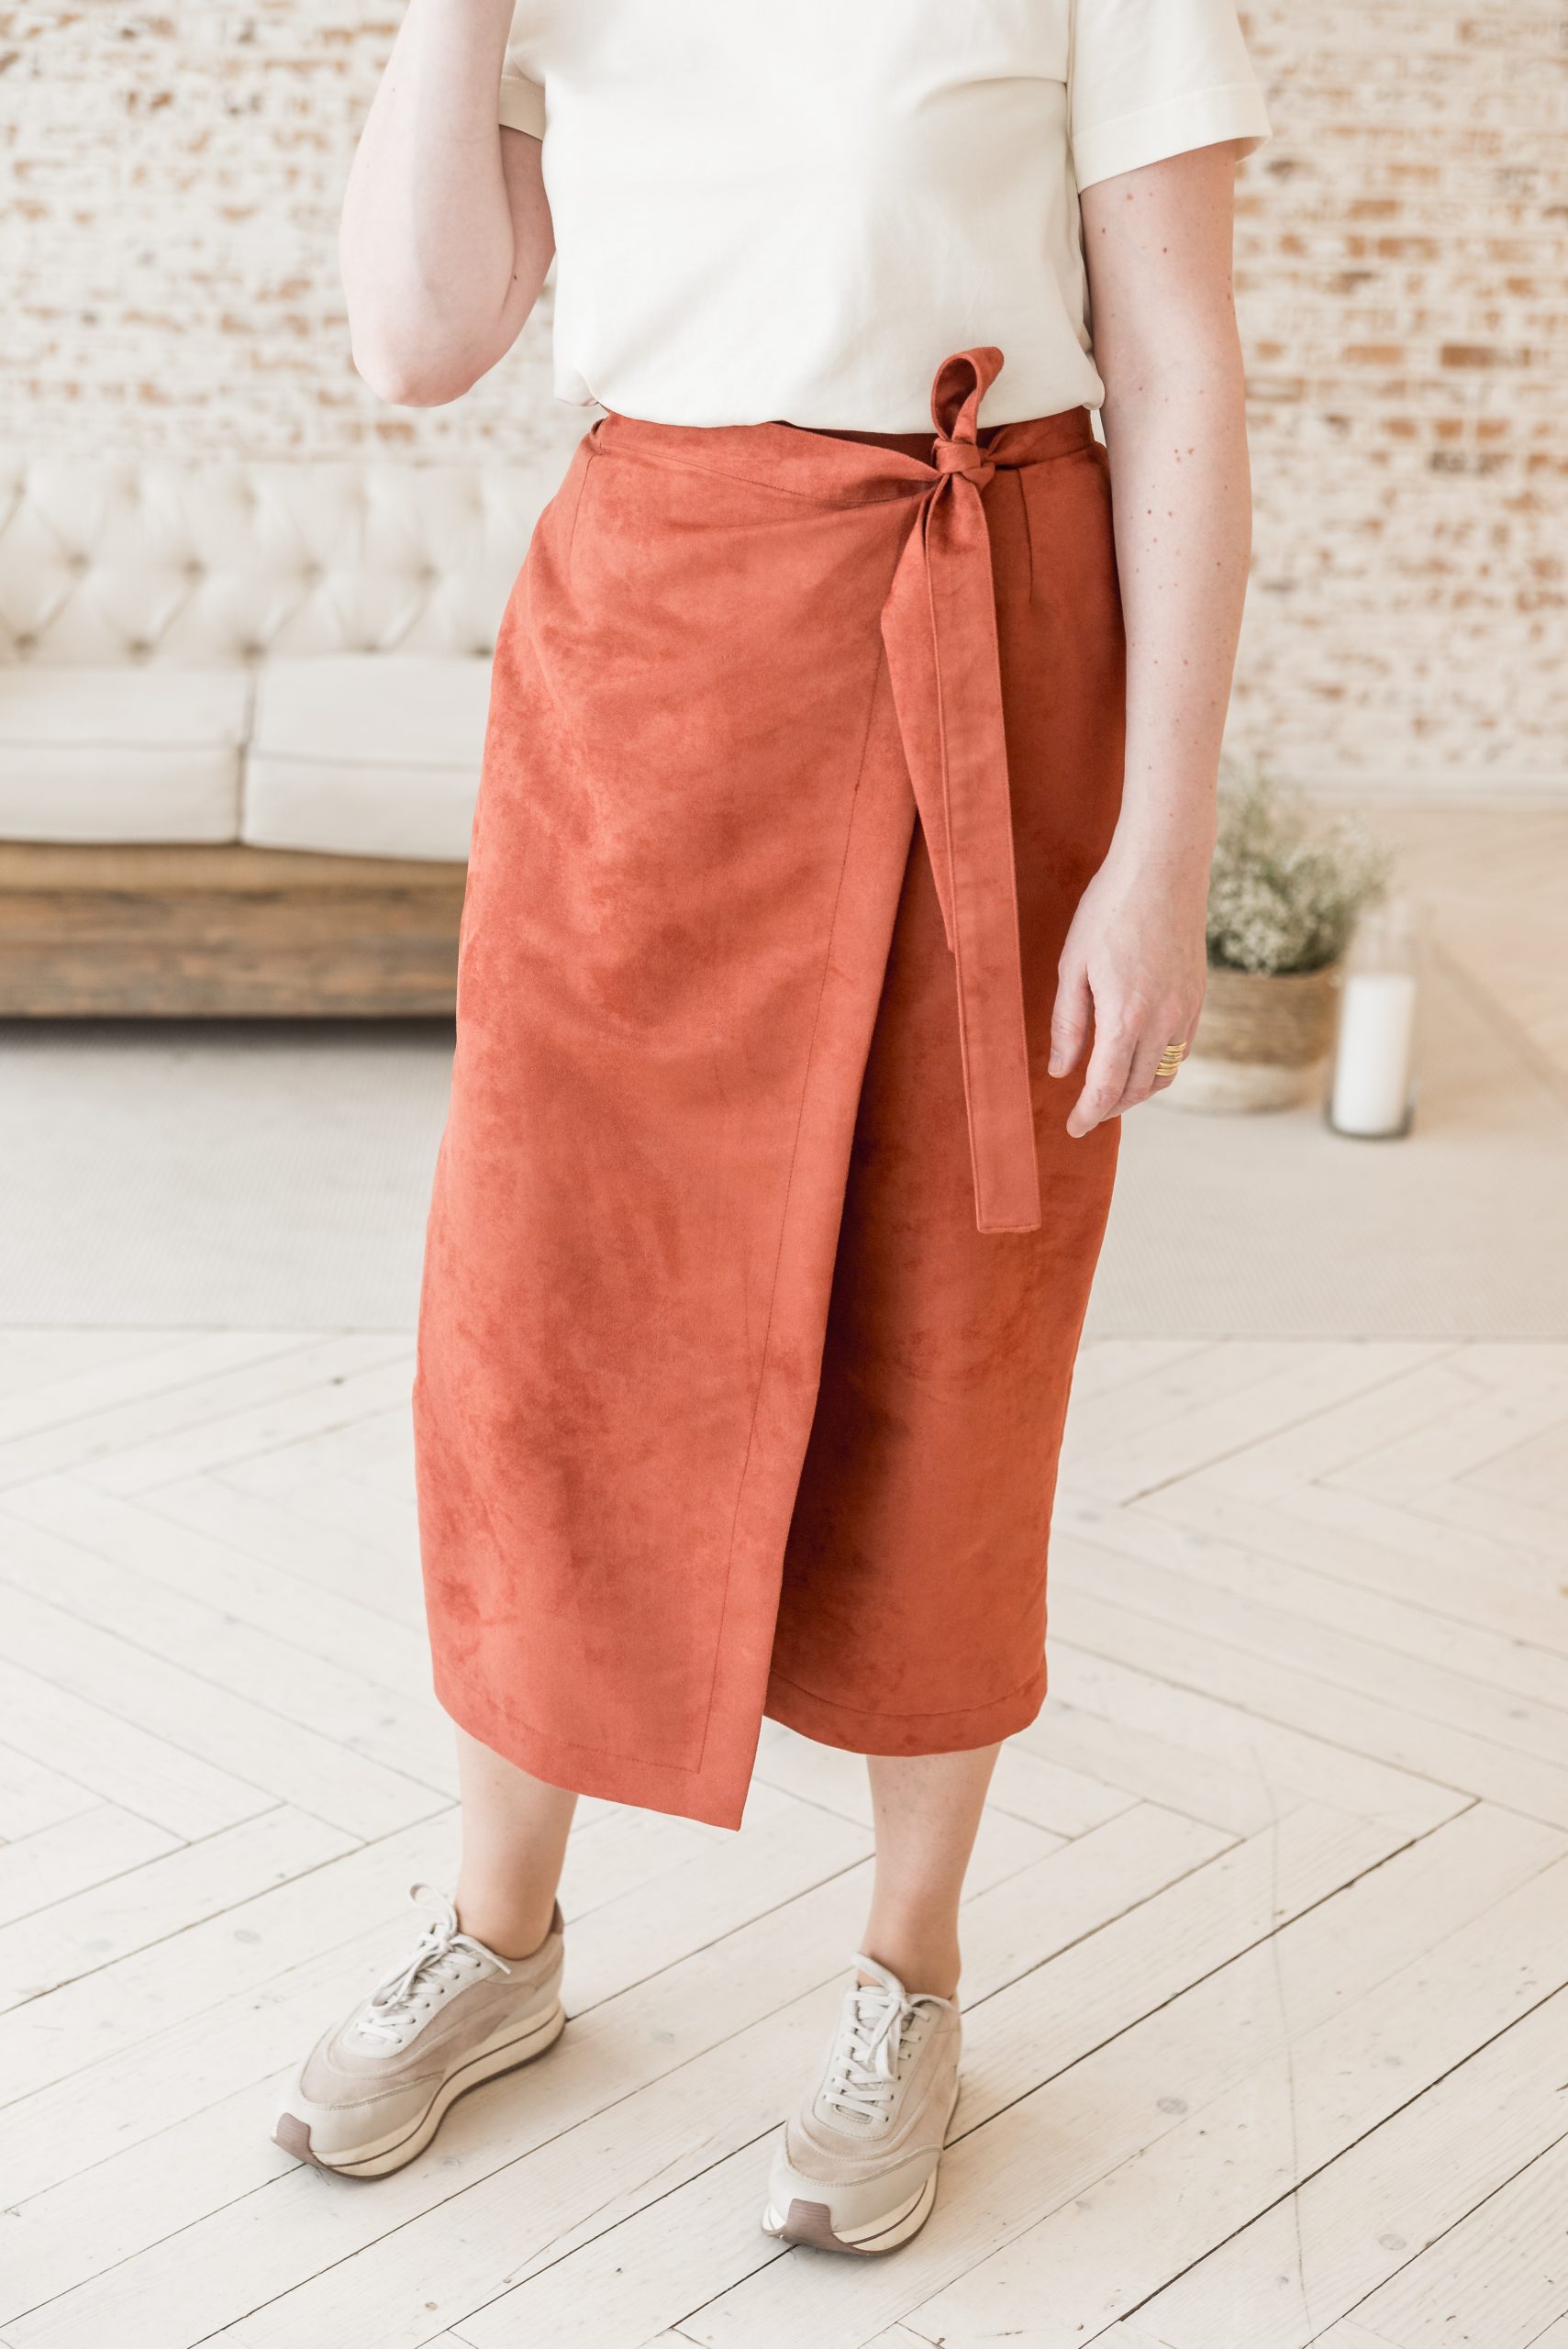 Buy Striped Linen Skirt by Designer SNEHA ARORA Online at Ogaan.com